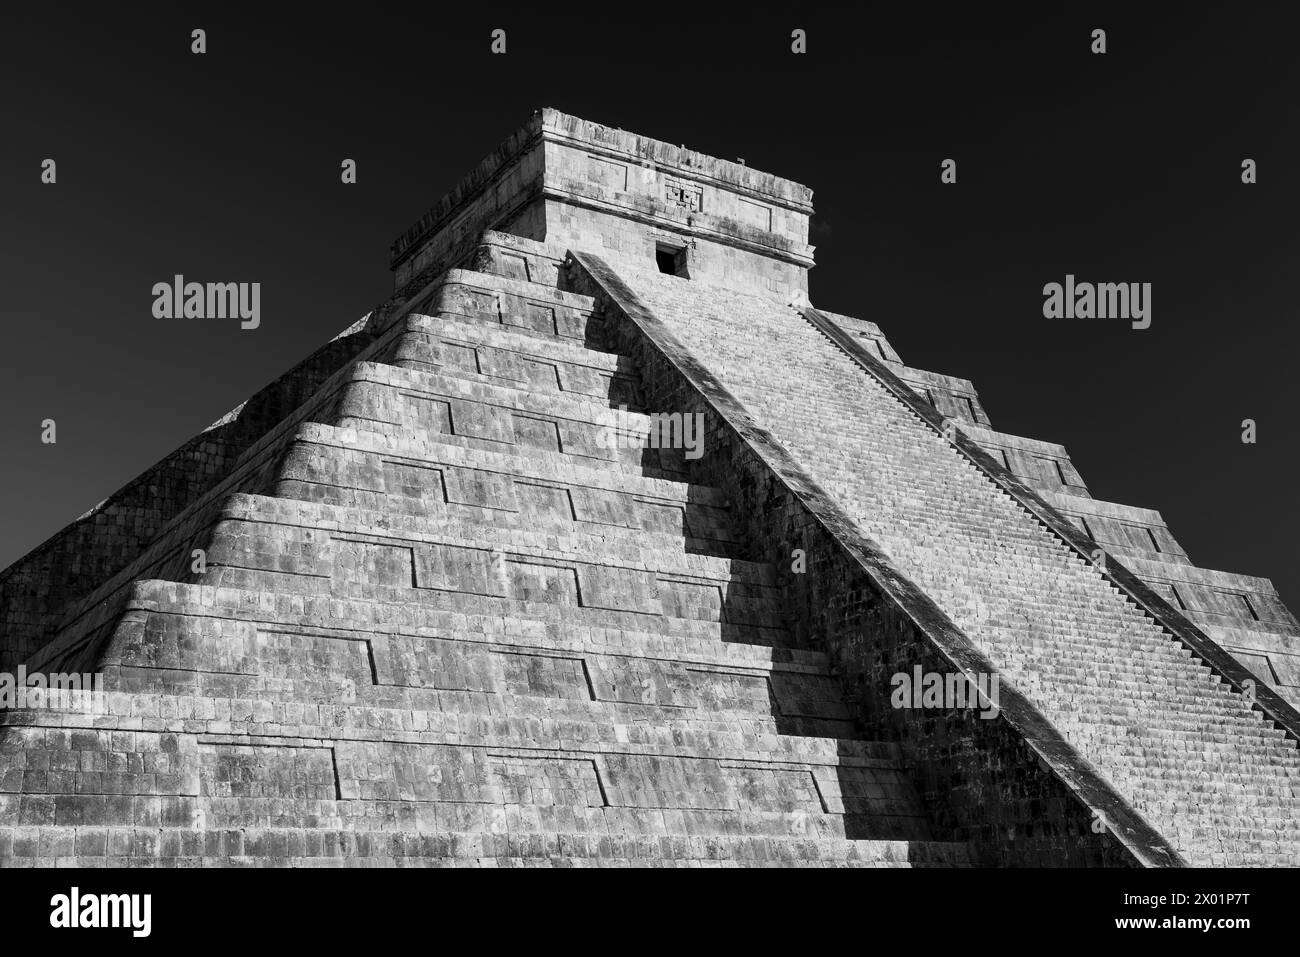 Kukulkan mayan pyramid in black and white, Chichen Itza, Mexico. Stock Photo